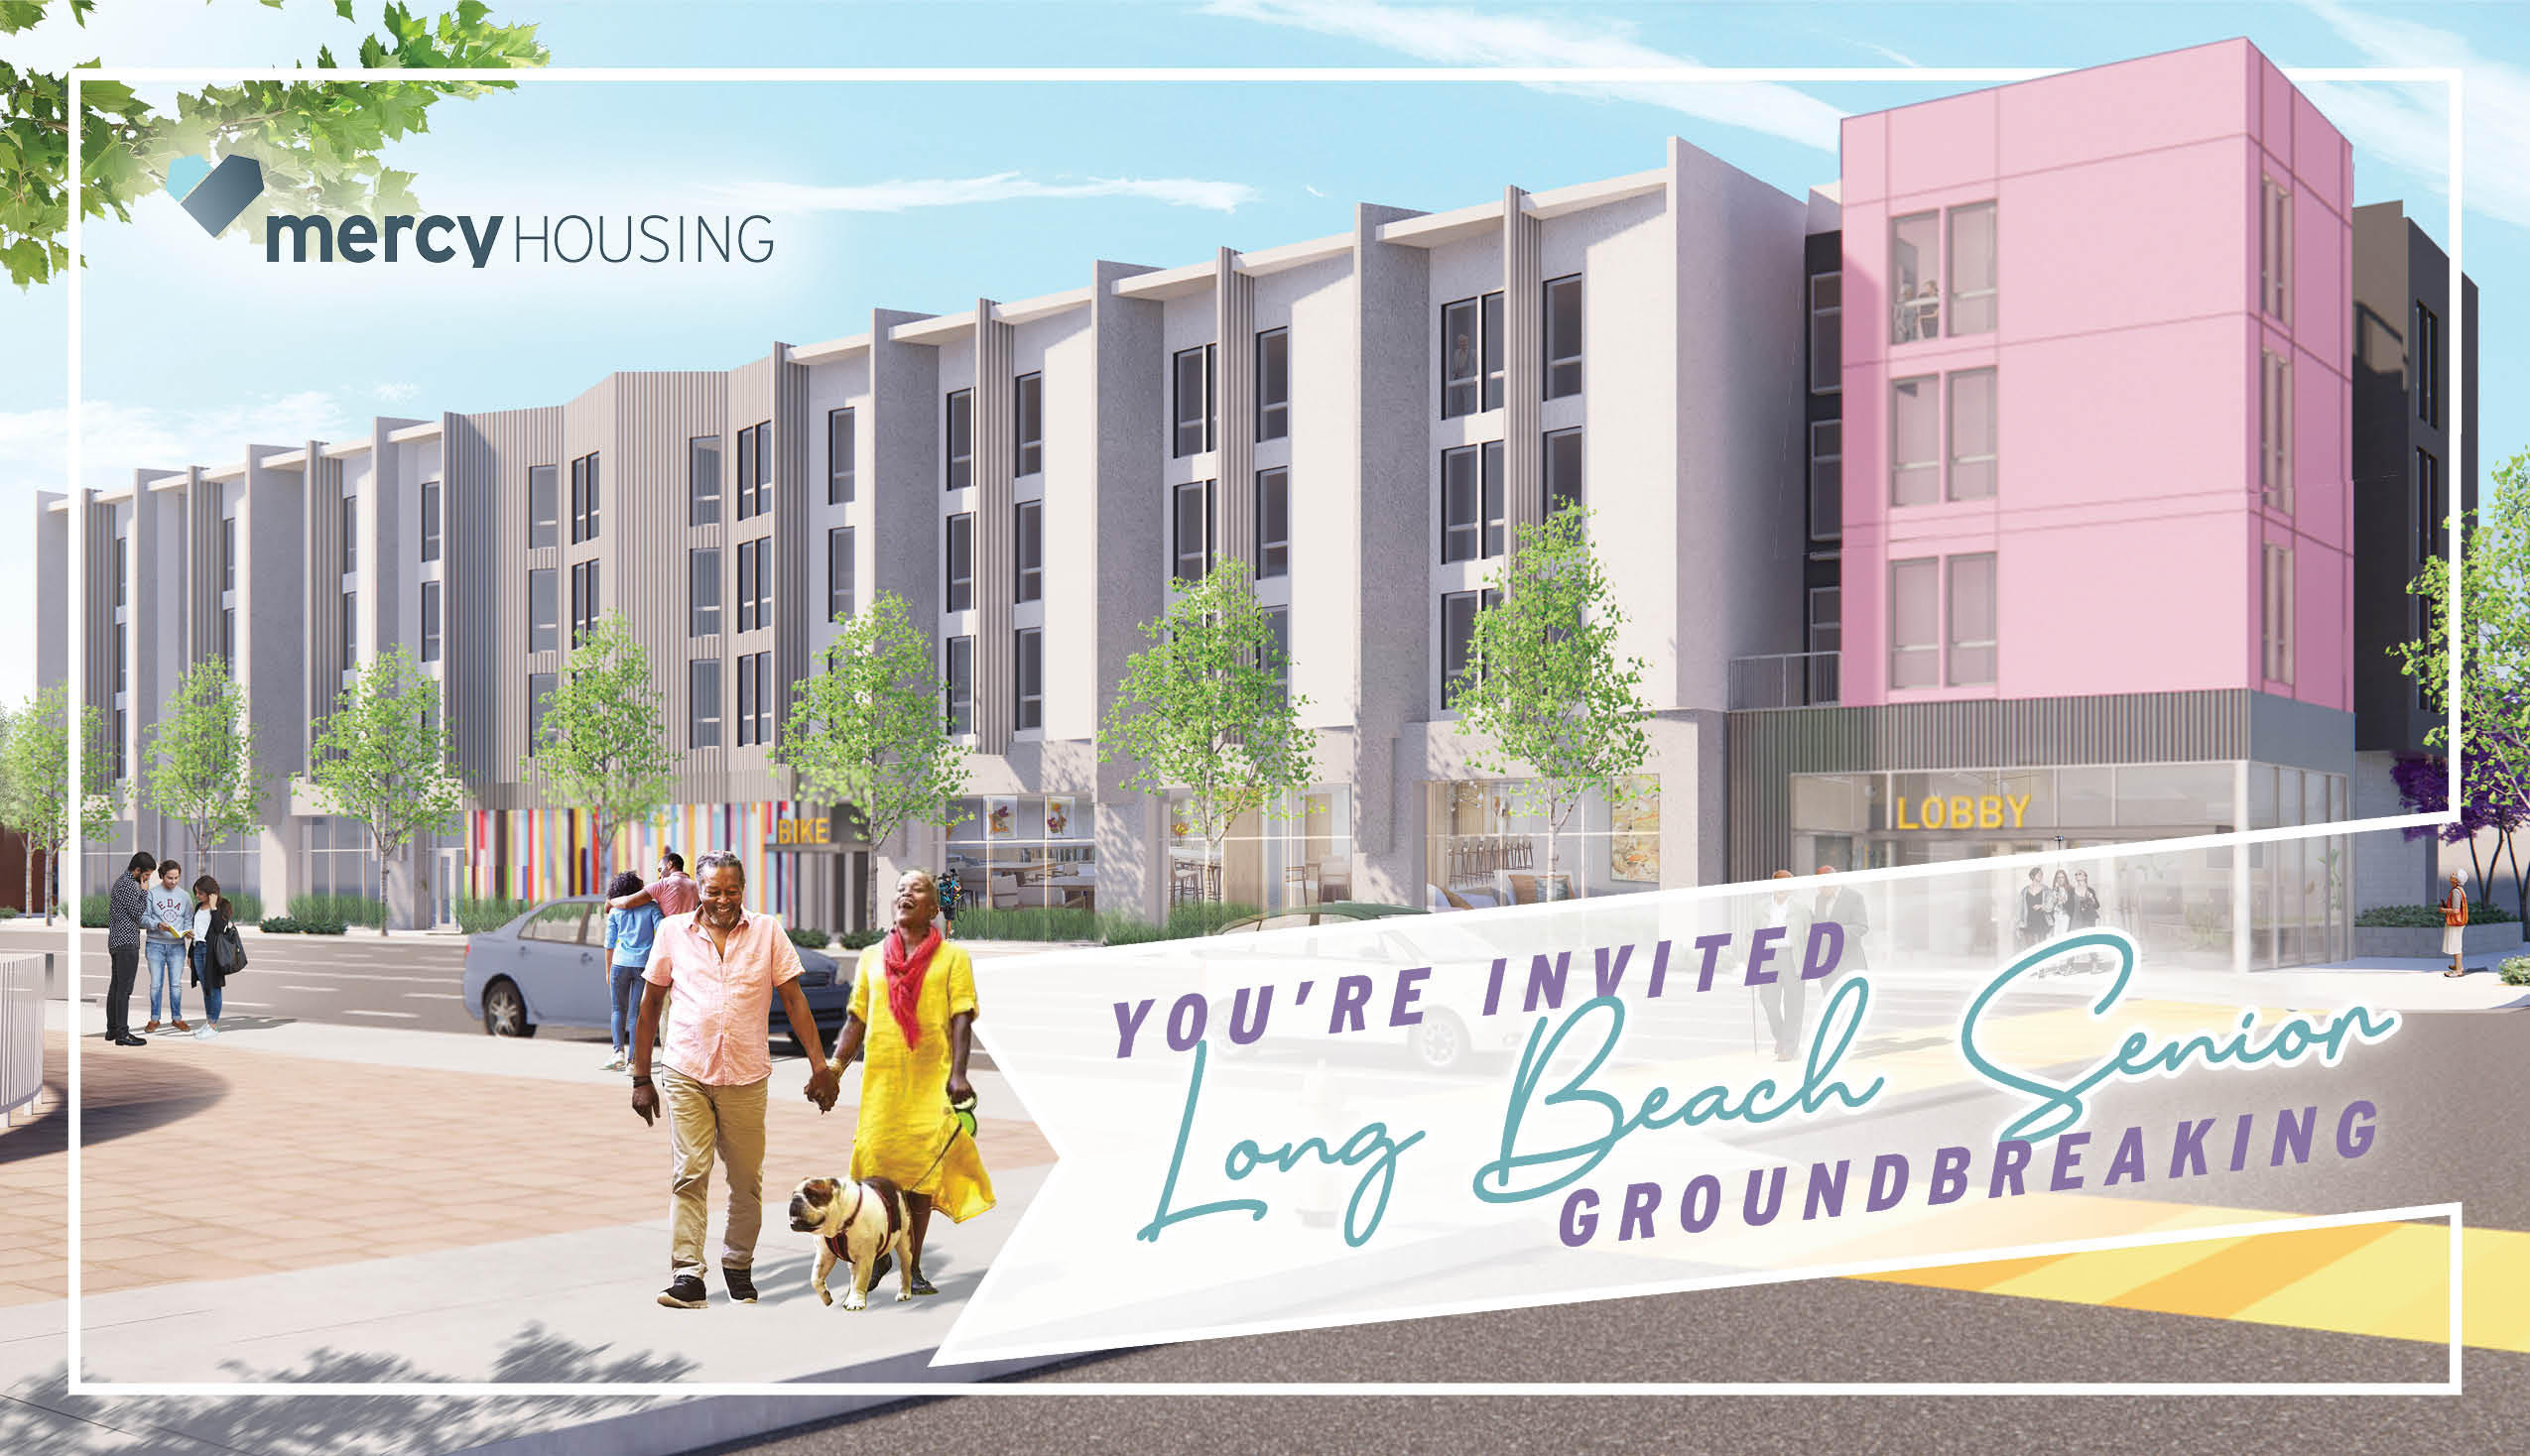 You're Invited Long Beach Senior Groundbreaking